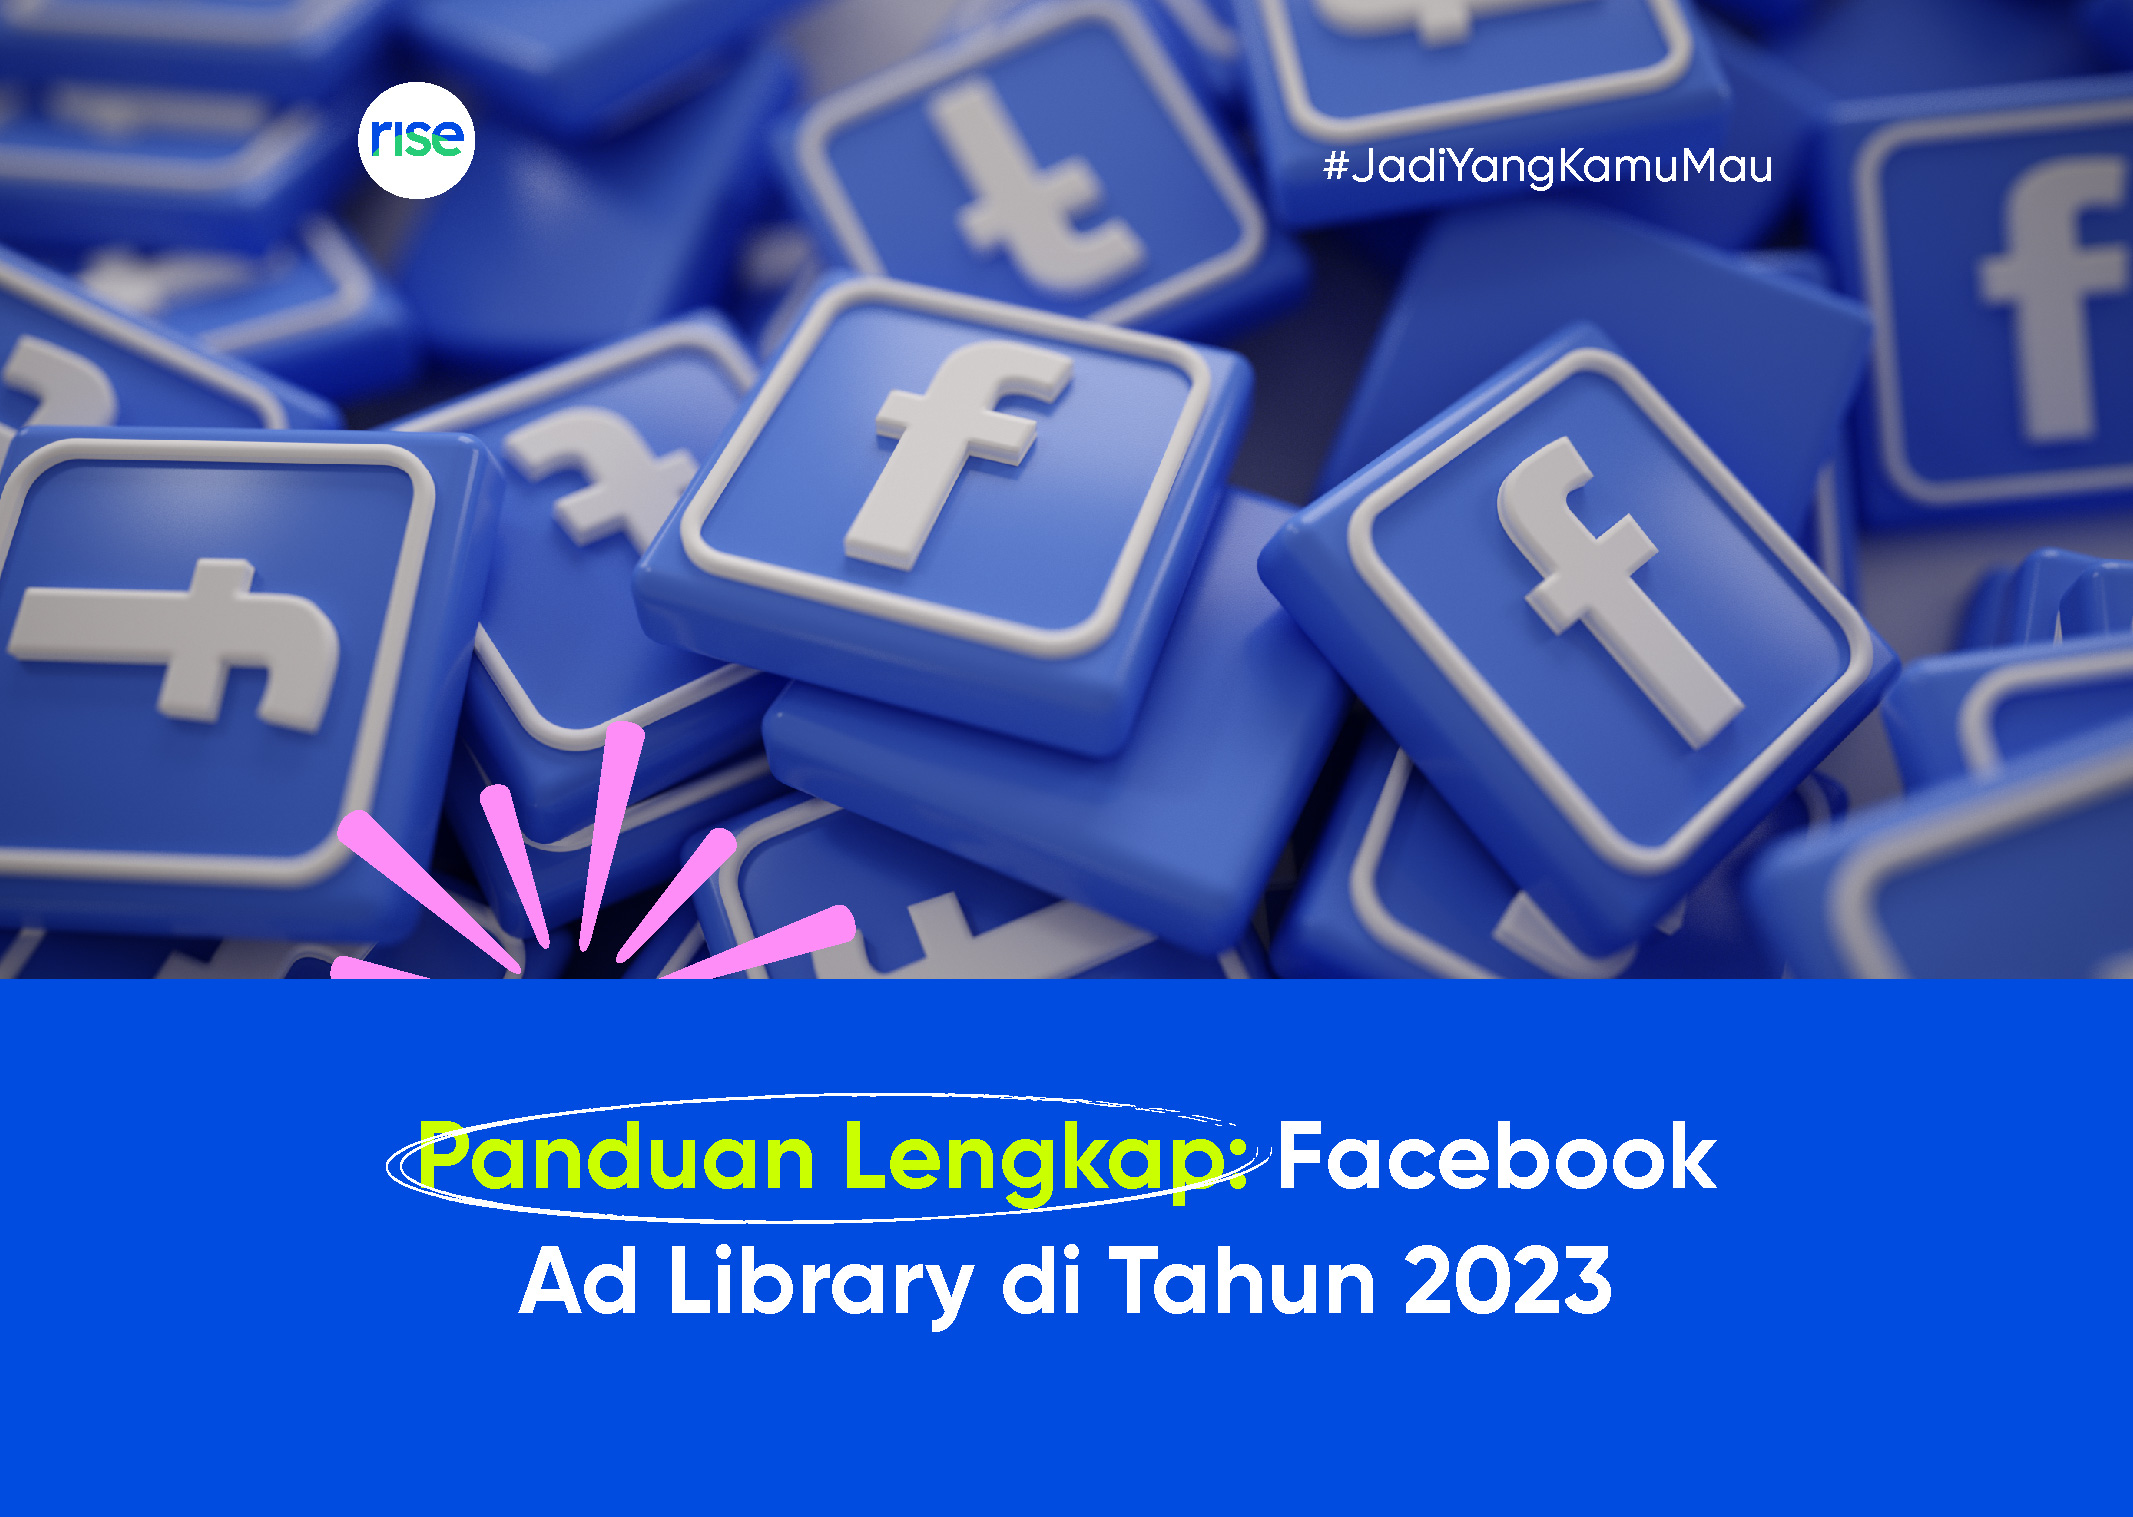 Panduan Lengkap: Facebook Ad Library di Tahun 2023